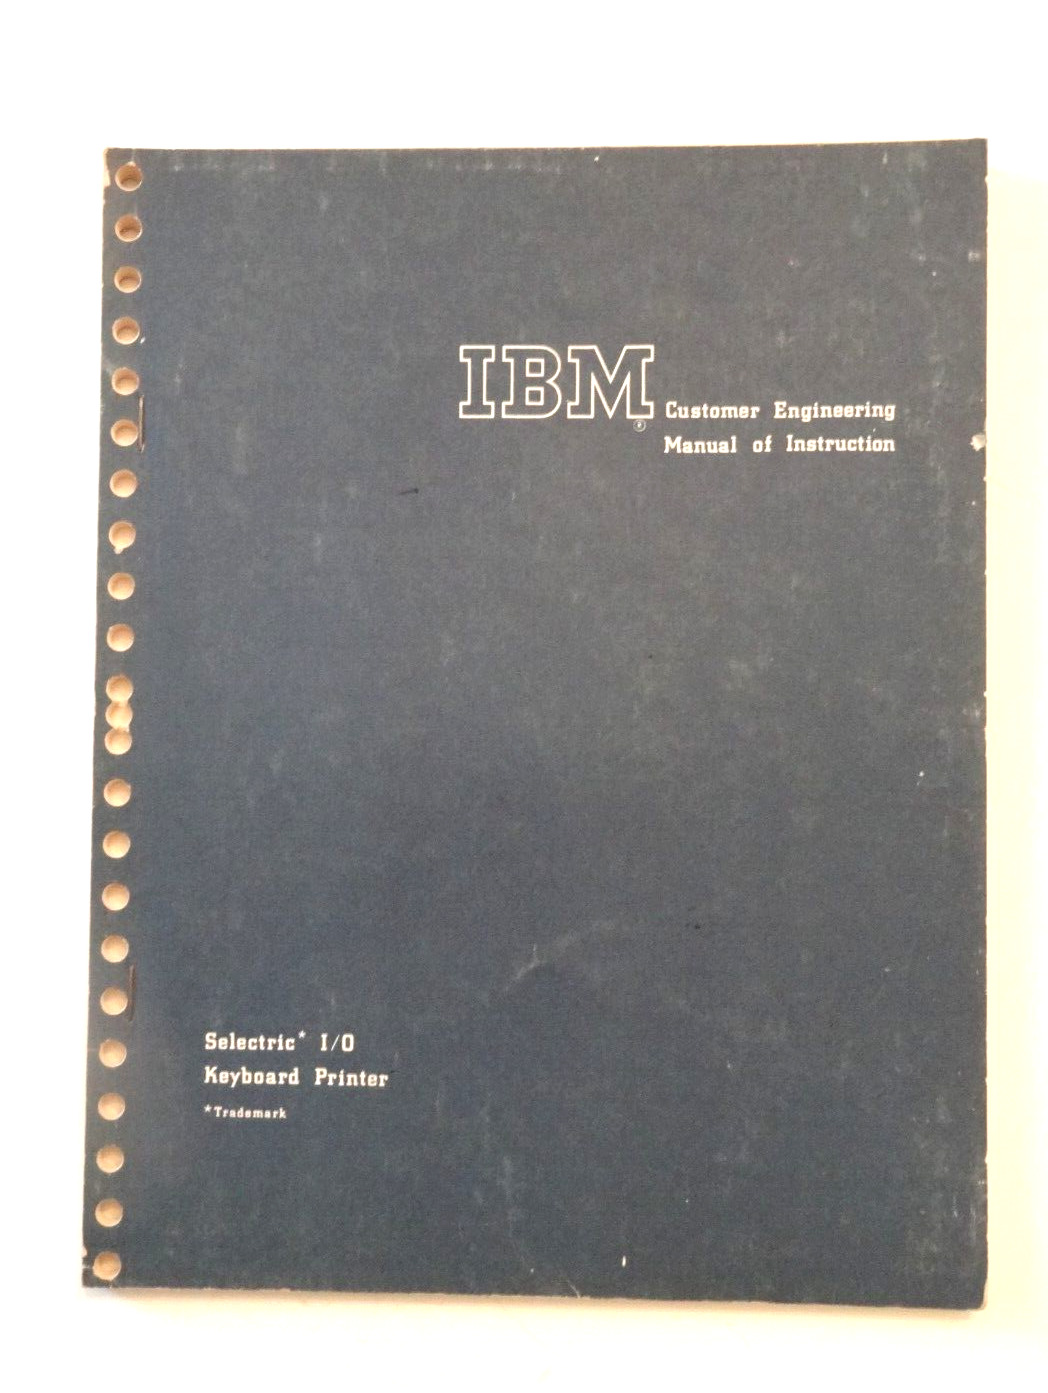 IBM Selectric I/O Keyboard Printer Customer Engineering Manual of Instruction